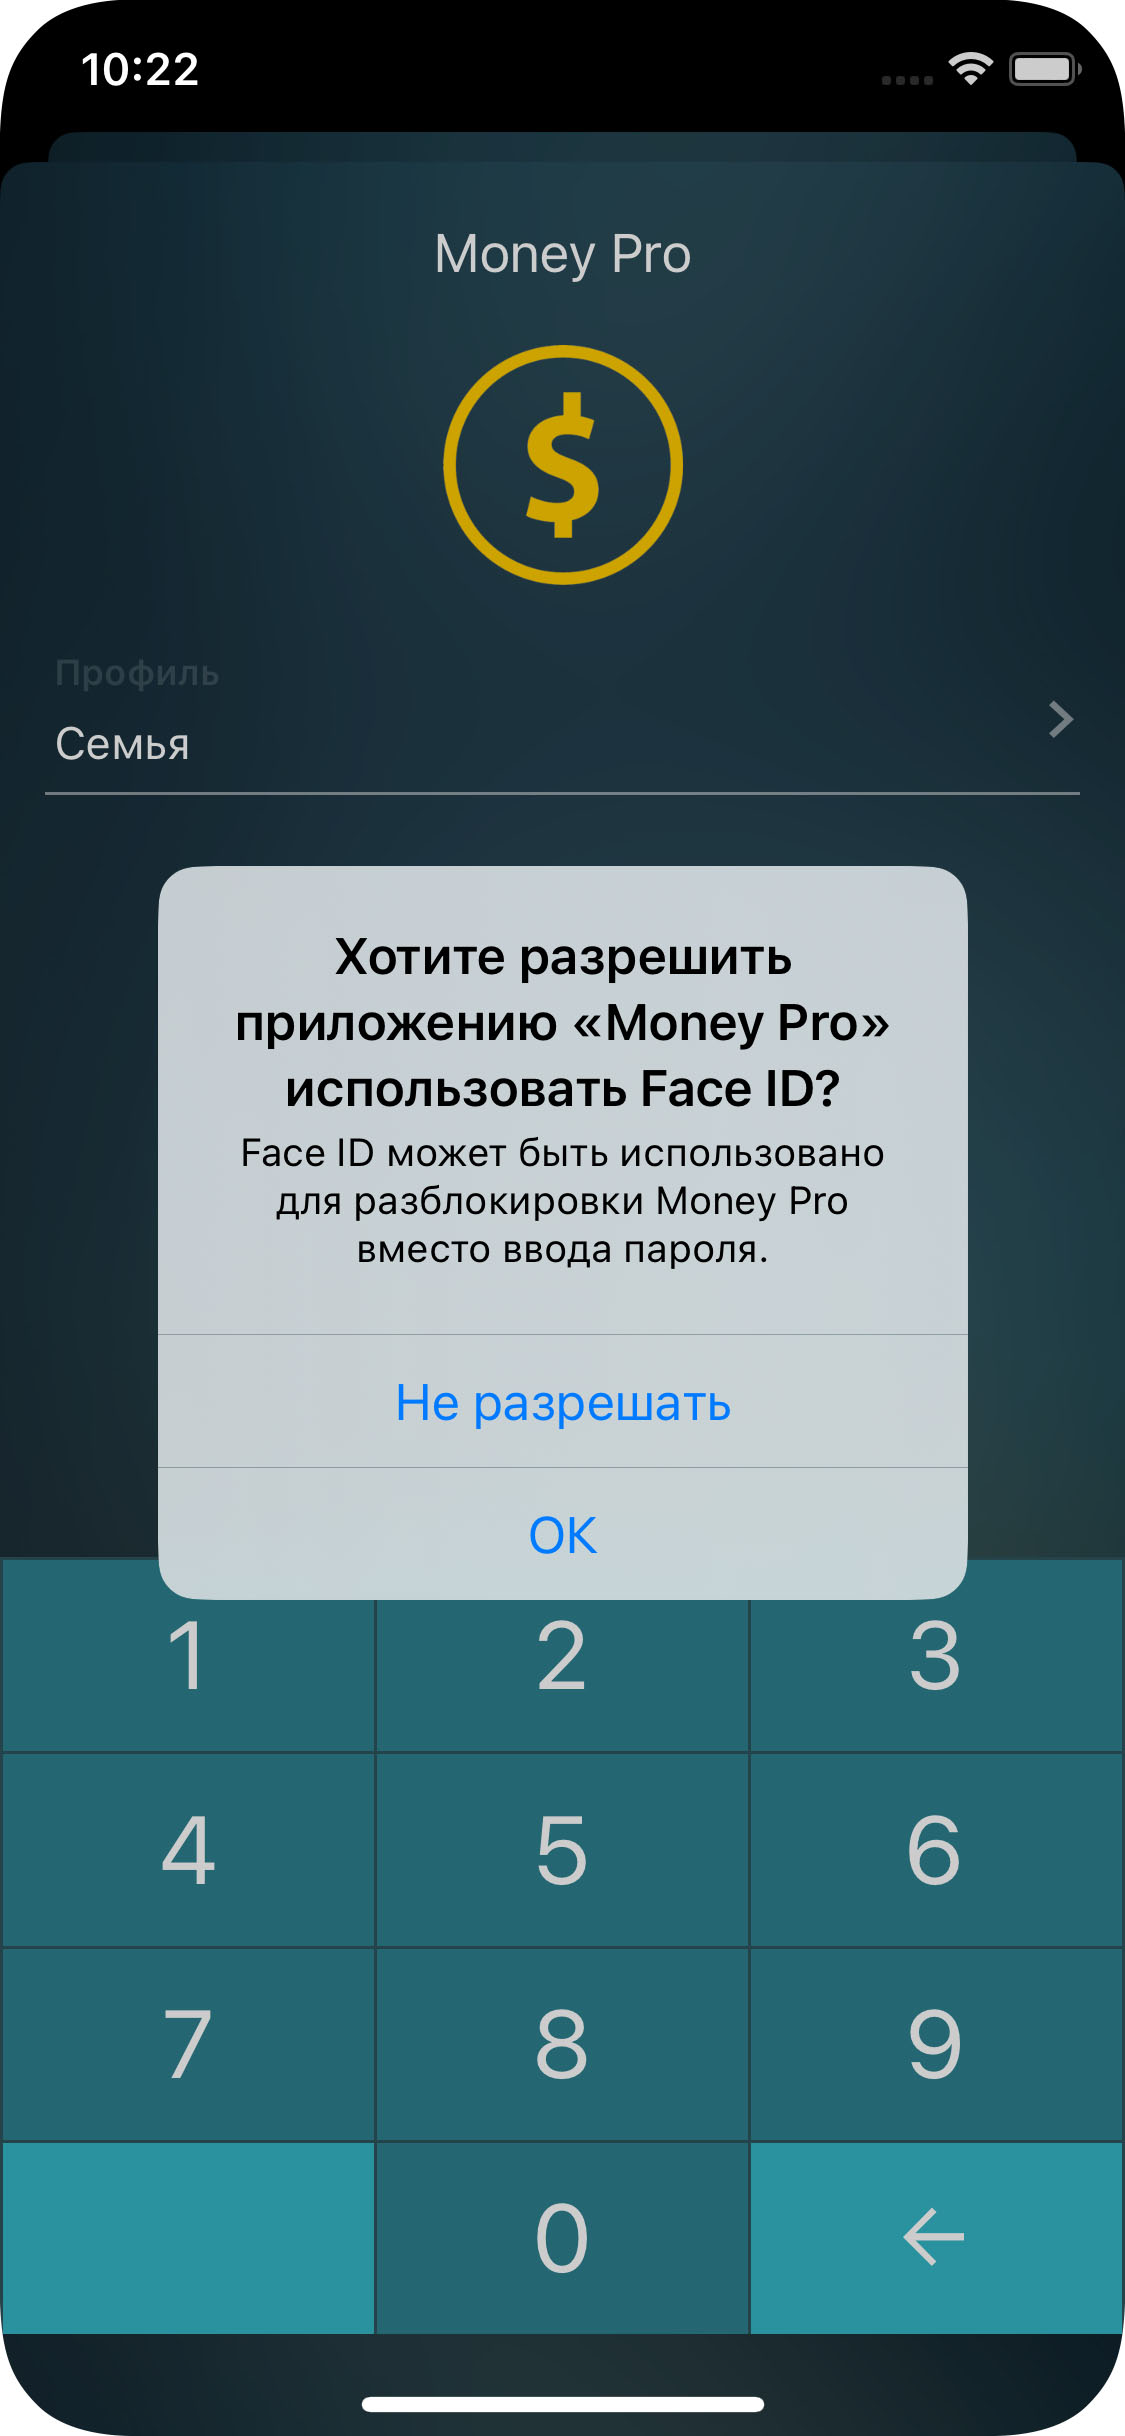 Money Pro - Система идентификации Touch ID (Face ID) - iPhone